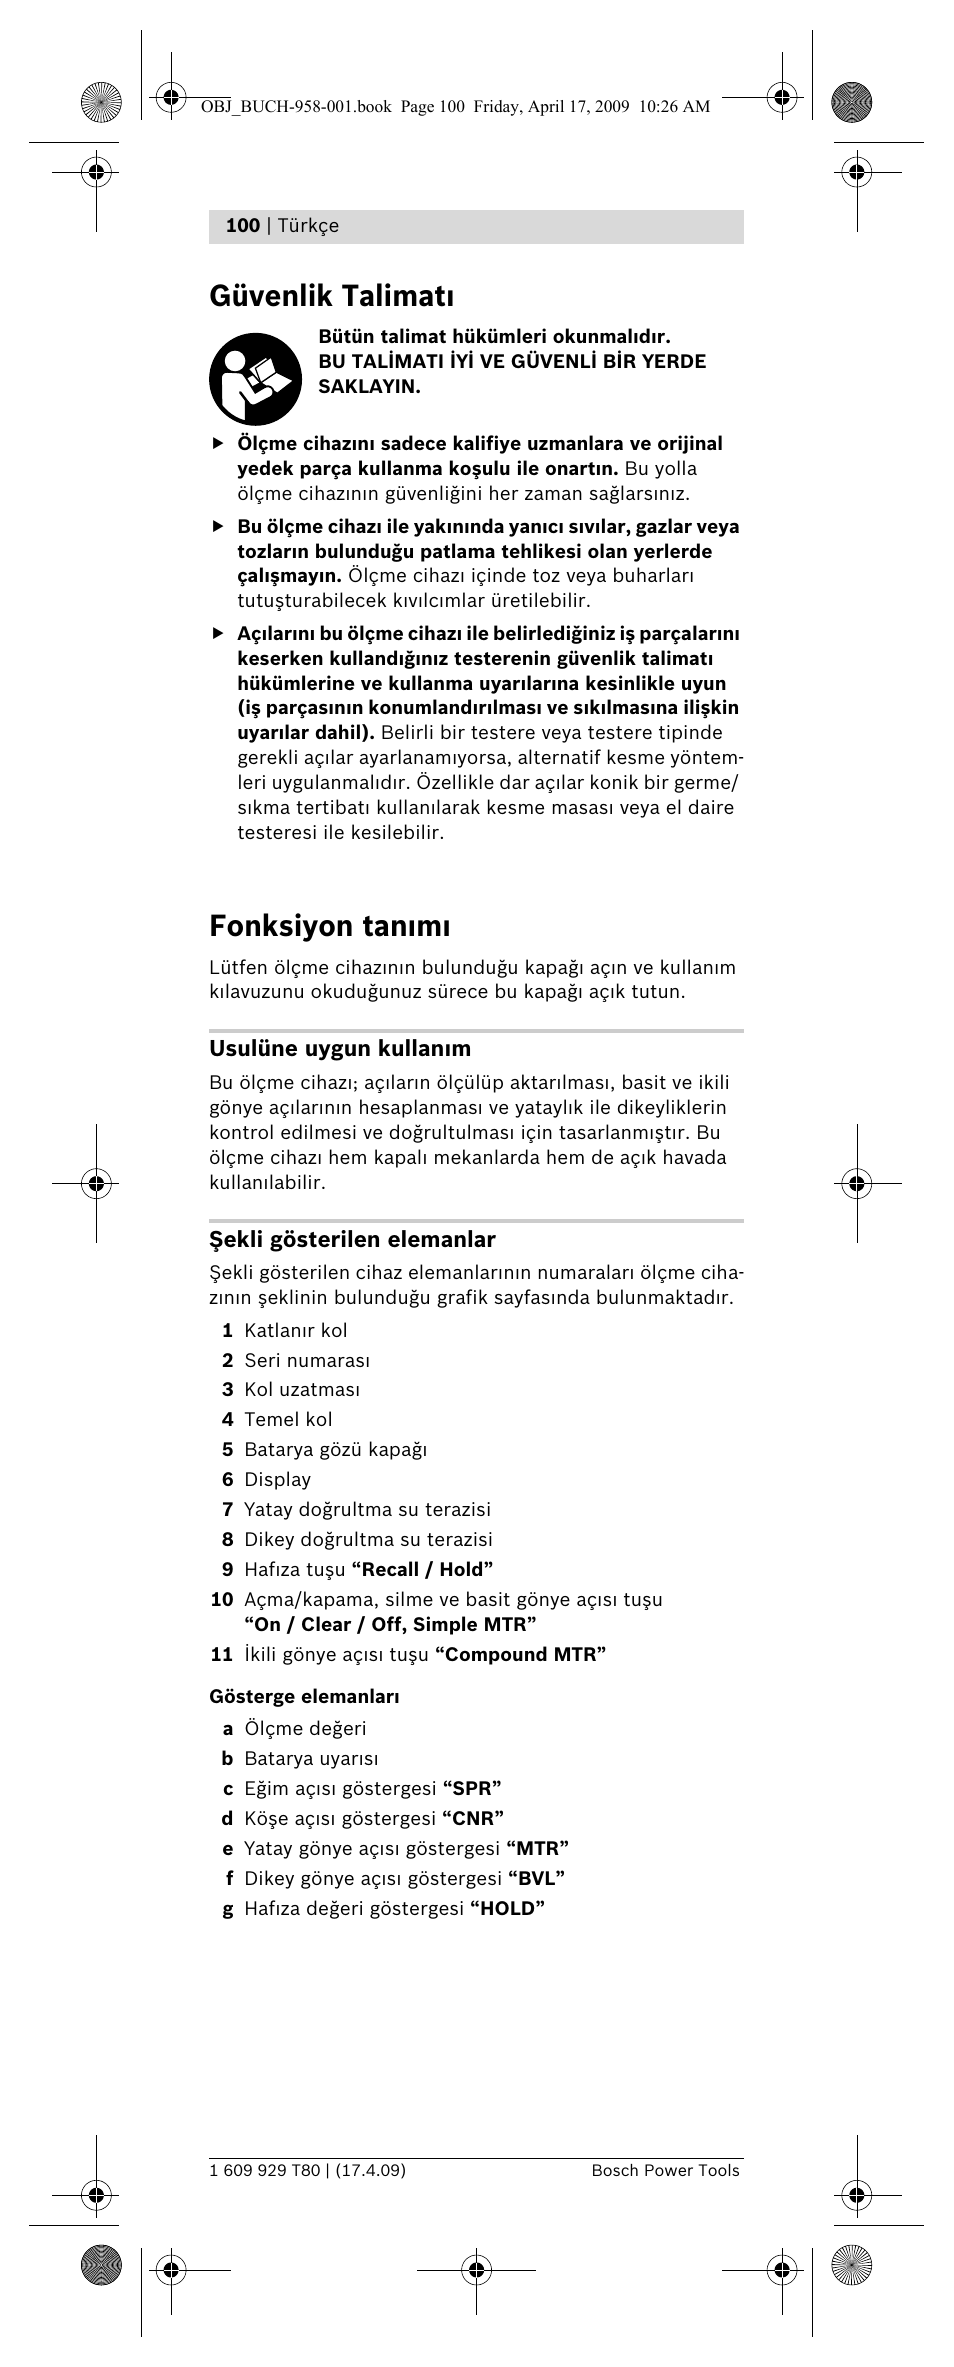 Guvenlik Talimat Fonksiyon Tan M Bosch Gam 2 Mf Professional User Manual Page 100 246 Original Mode